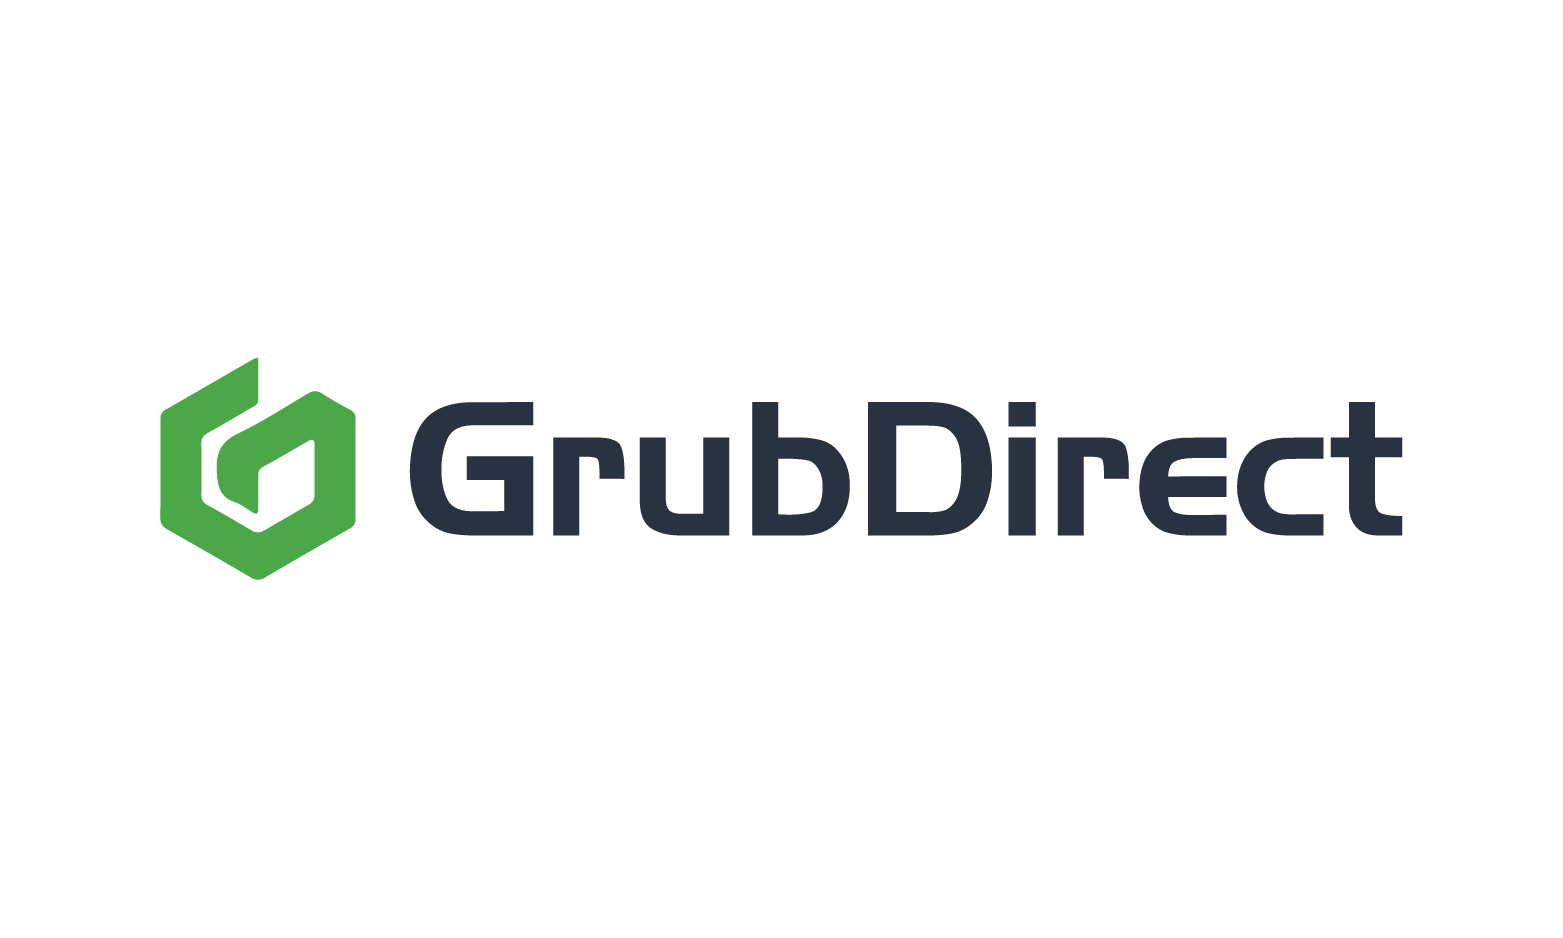 GrubDirect.com - Creative brandable domain for sale